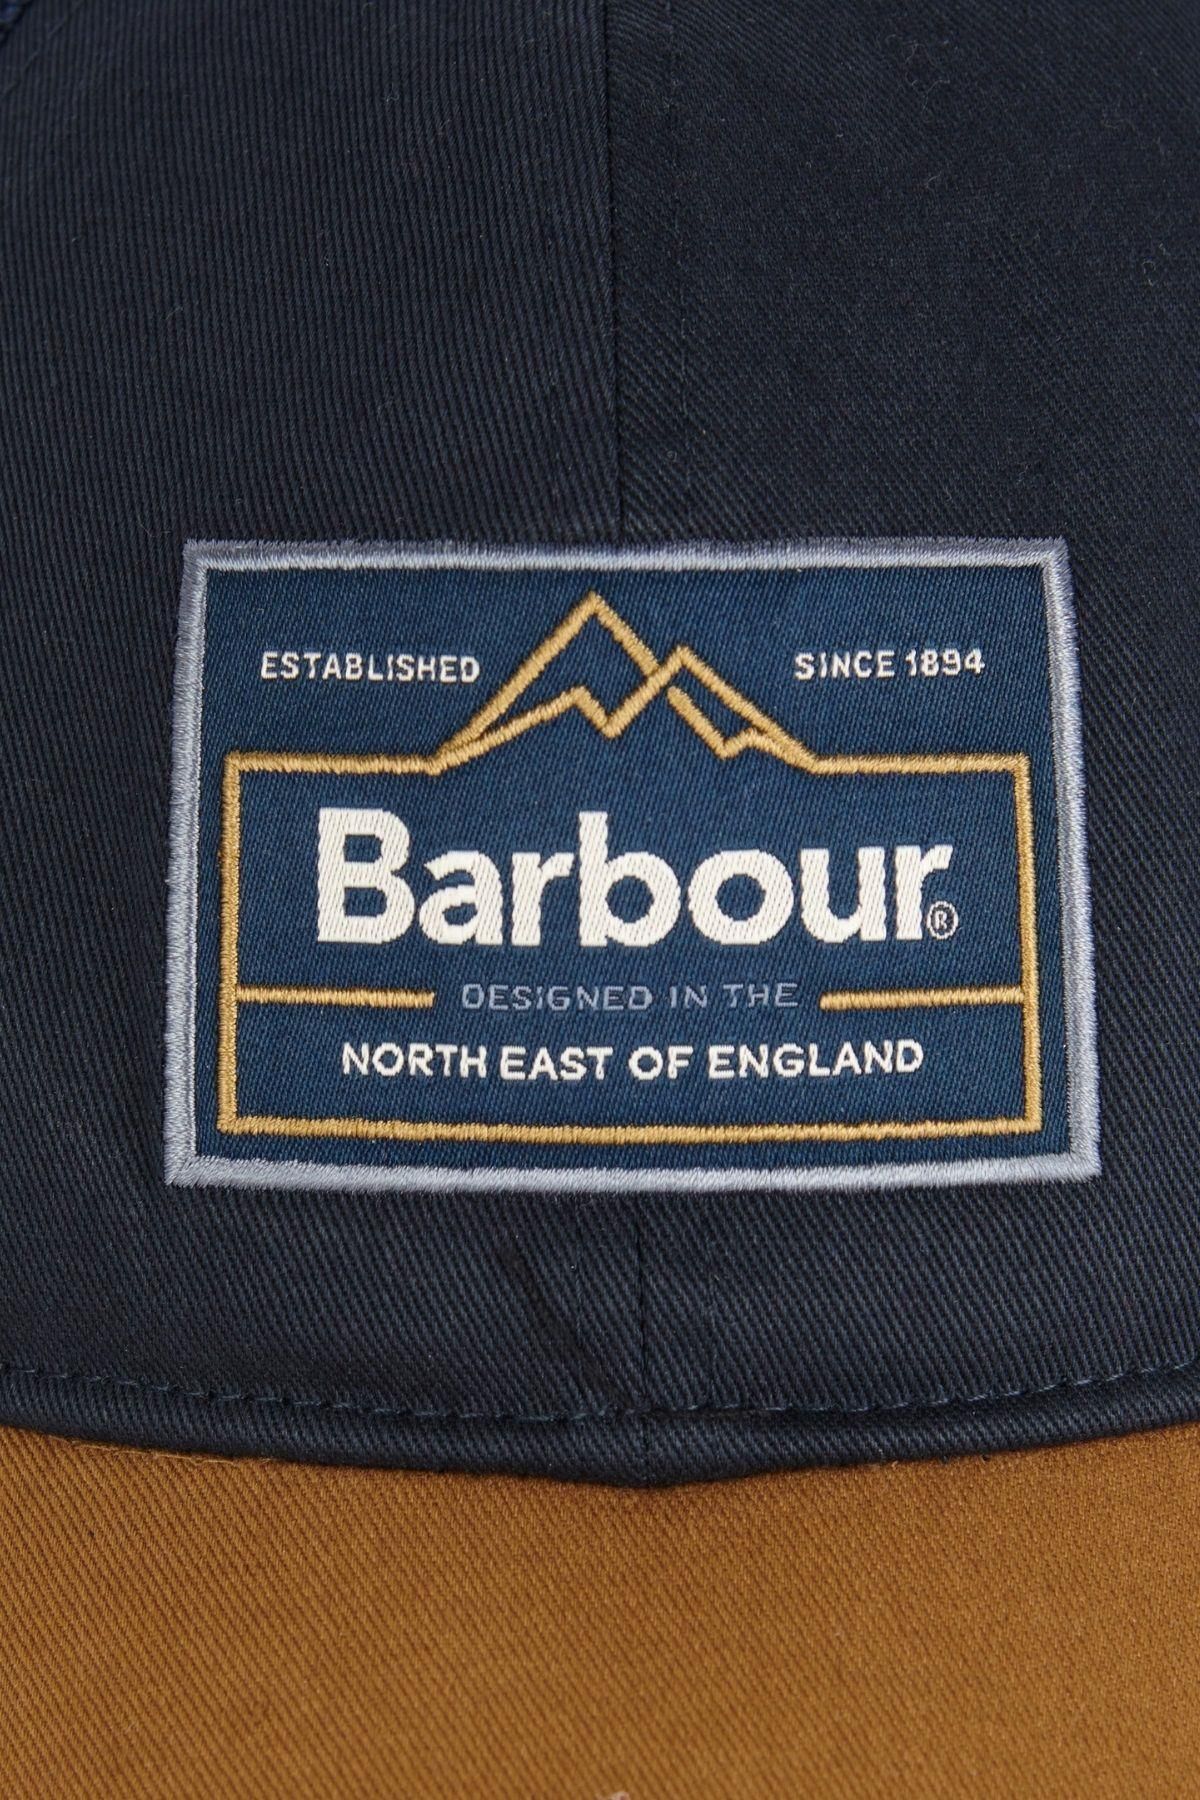 Barbour کلاه کامیون بانکی نیروی دریایی/Russet